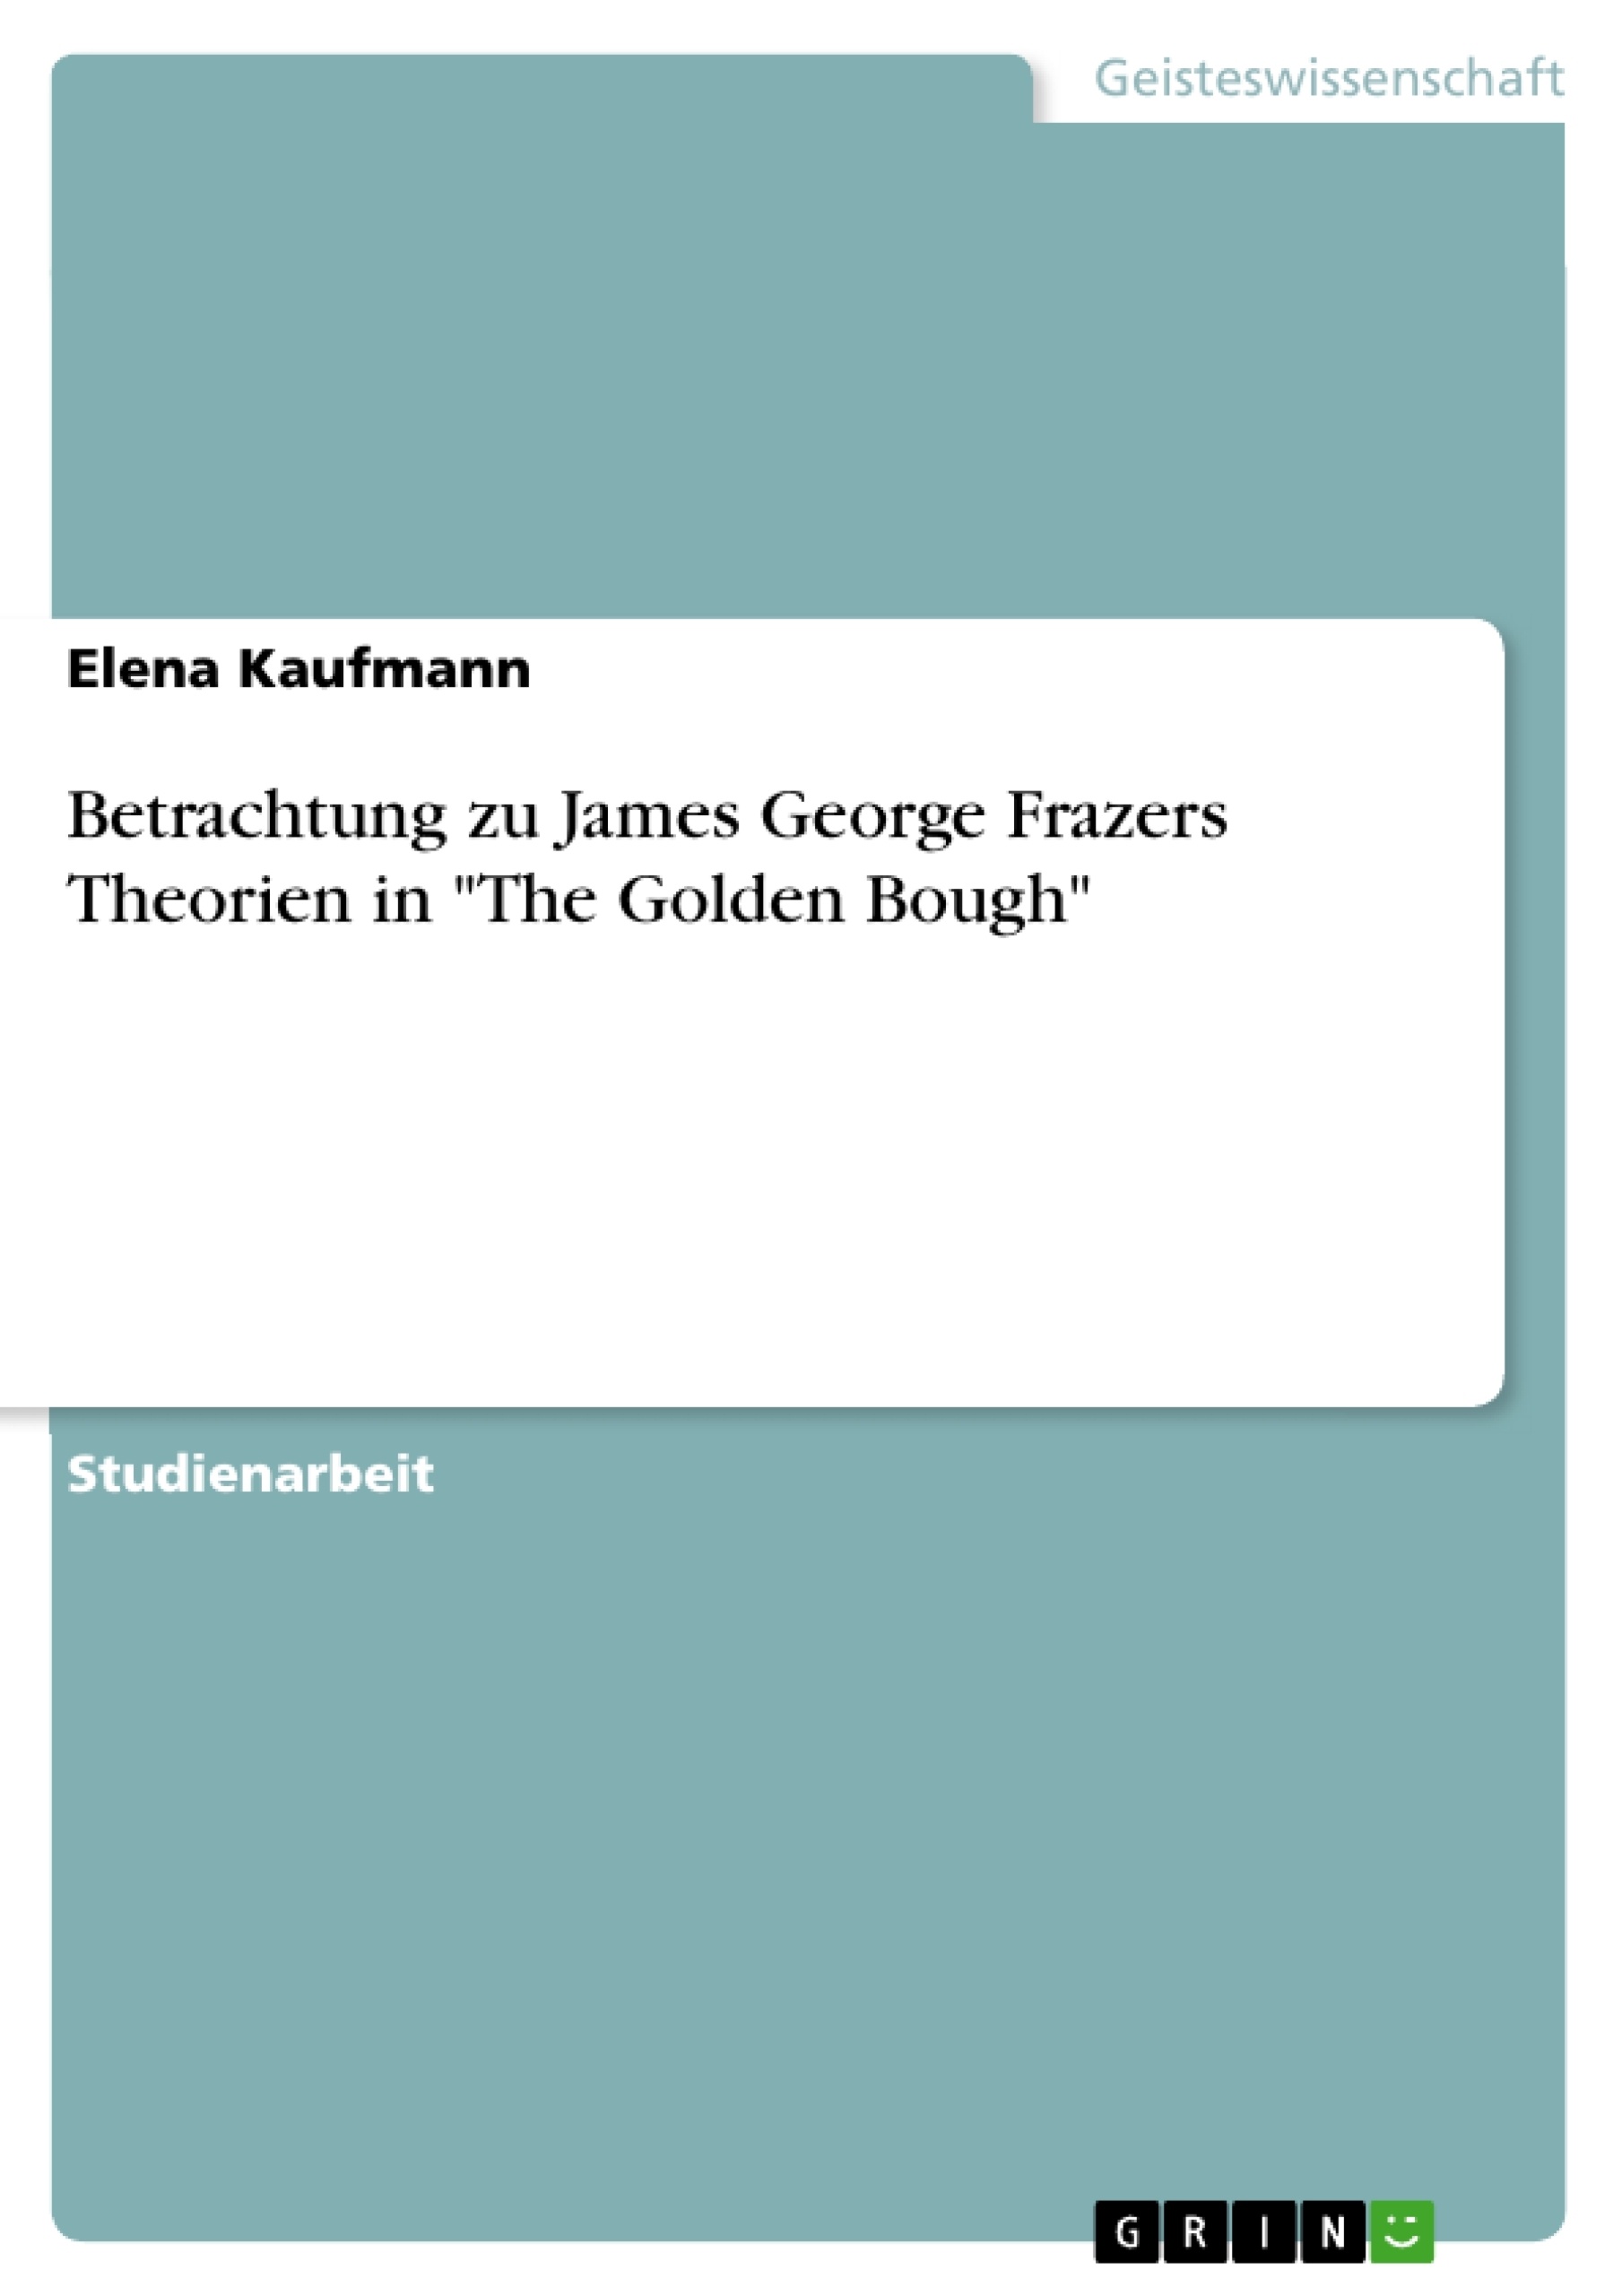 Título: Betrachtung zu James George Frazers Theorien in "The Golden Bough"